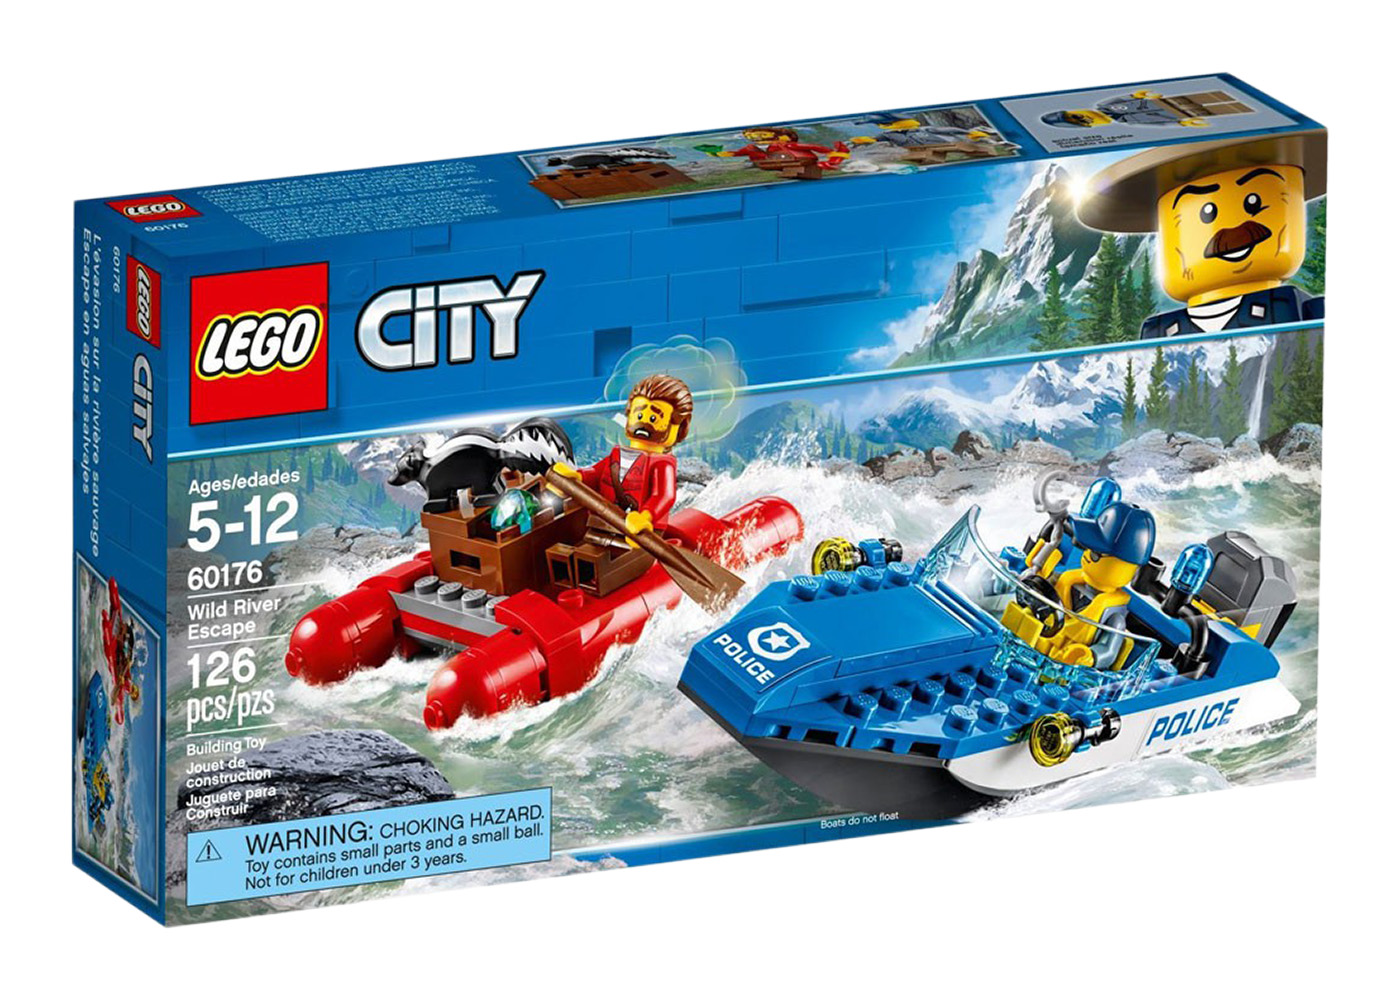 LEGO City Wild River Escape Set 60176 - JP